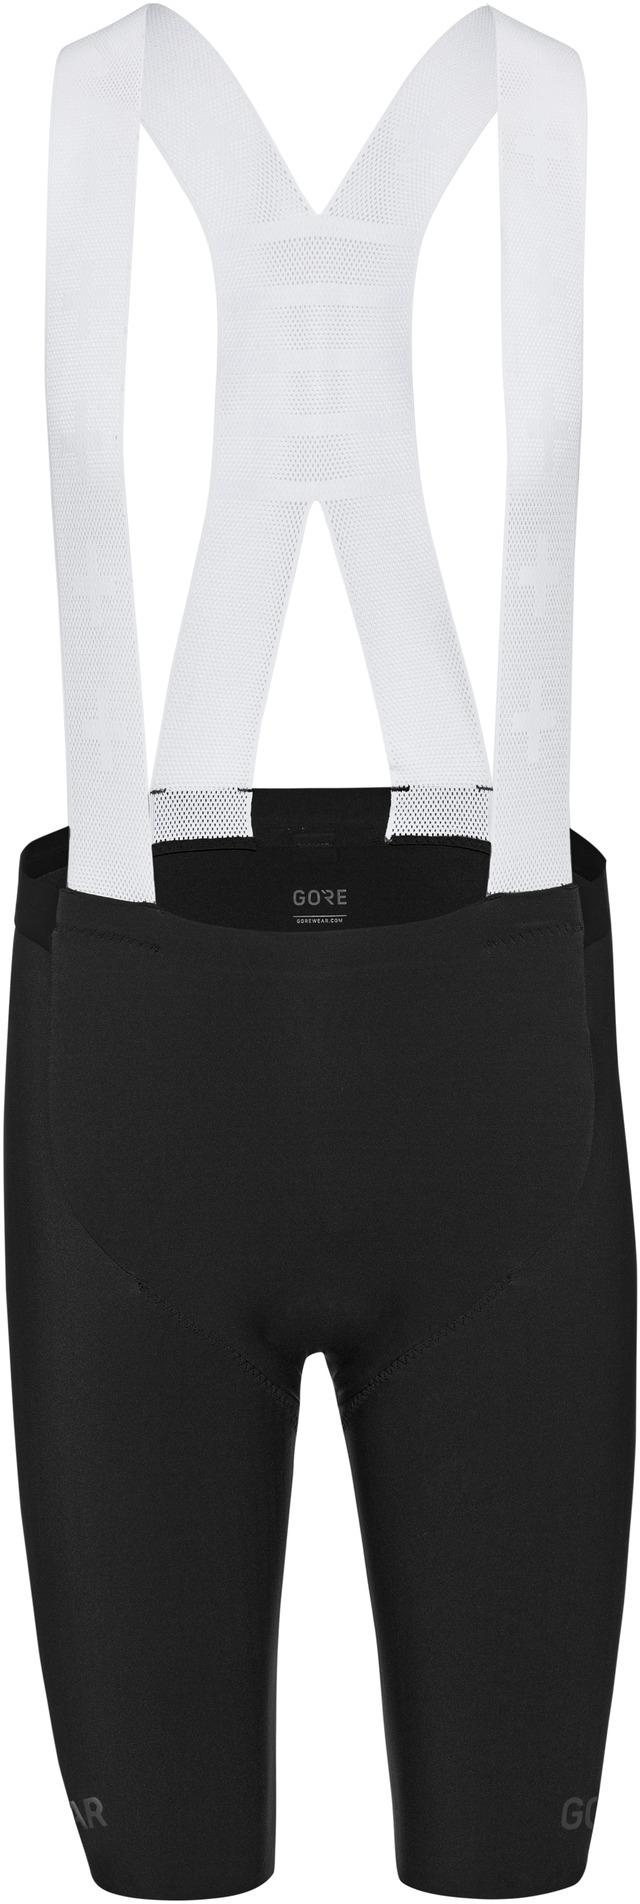 Gorewear Distance Bib Shorts Plus 2.0 - Black